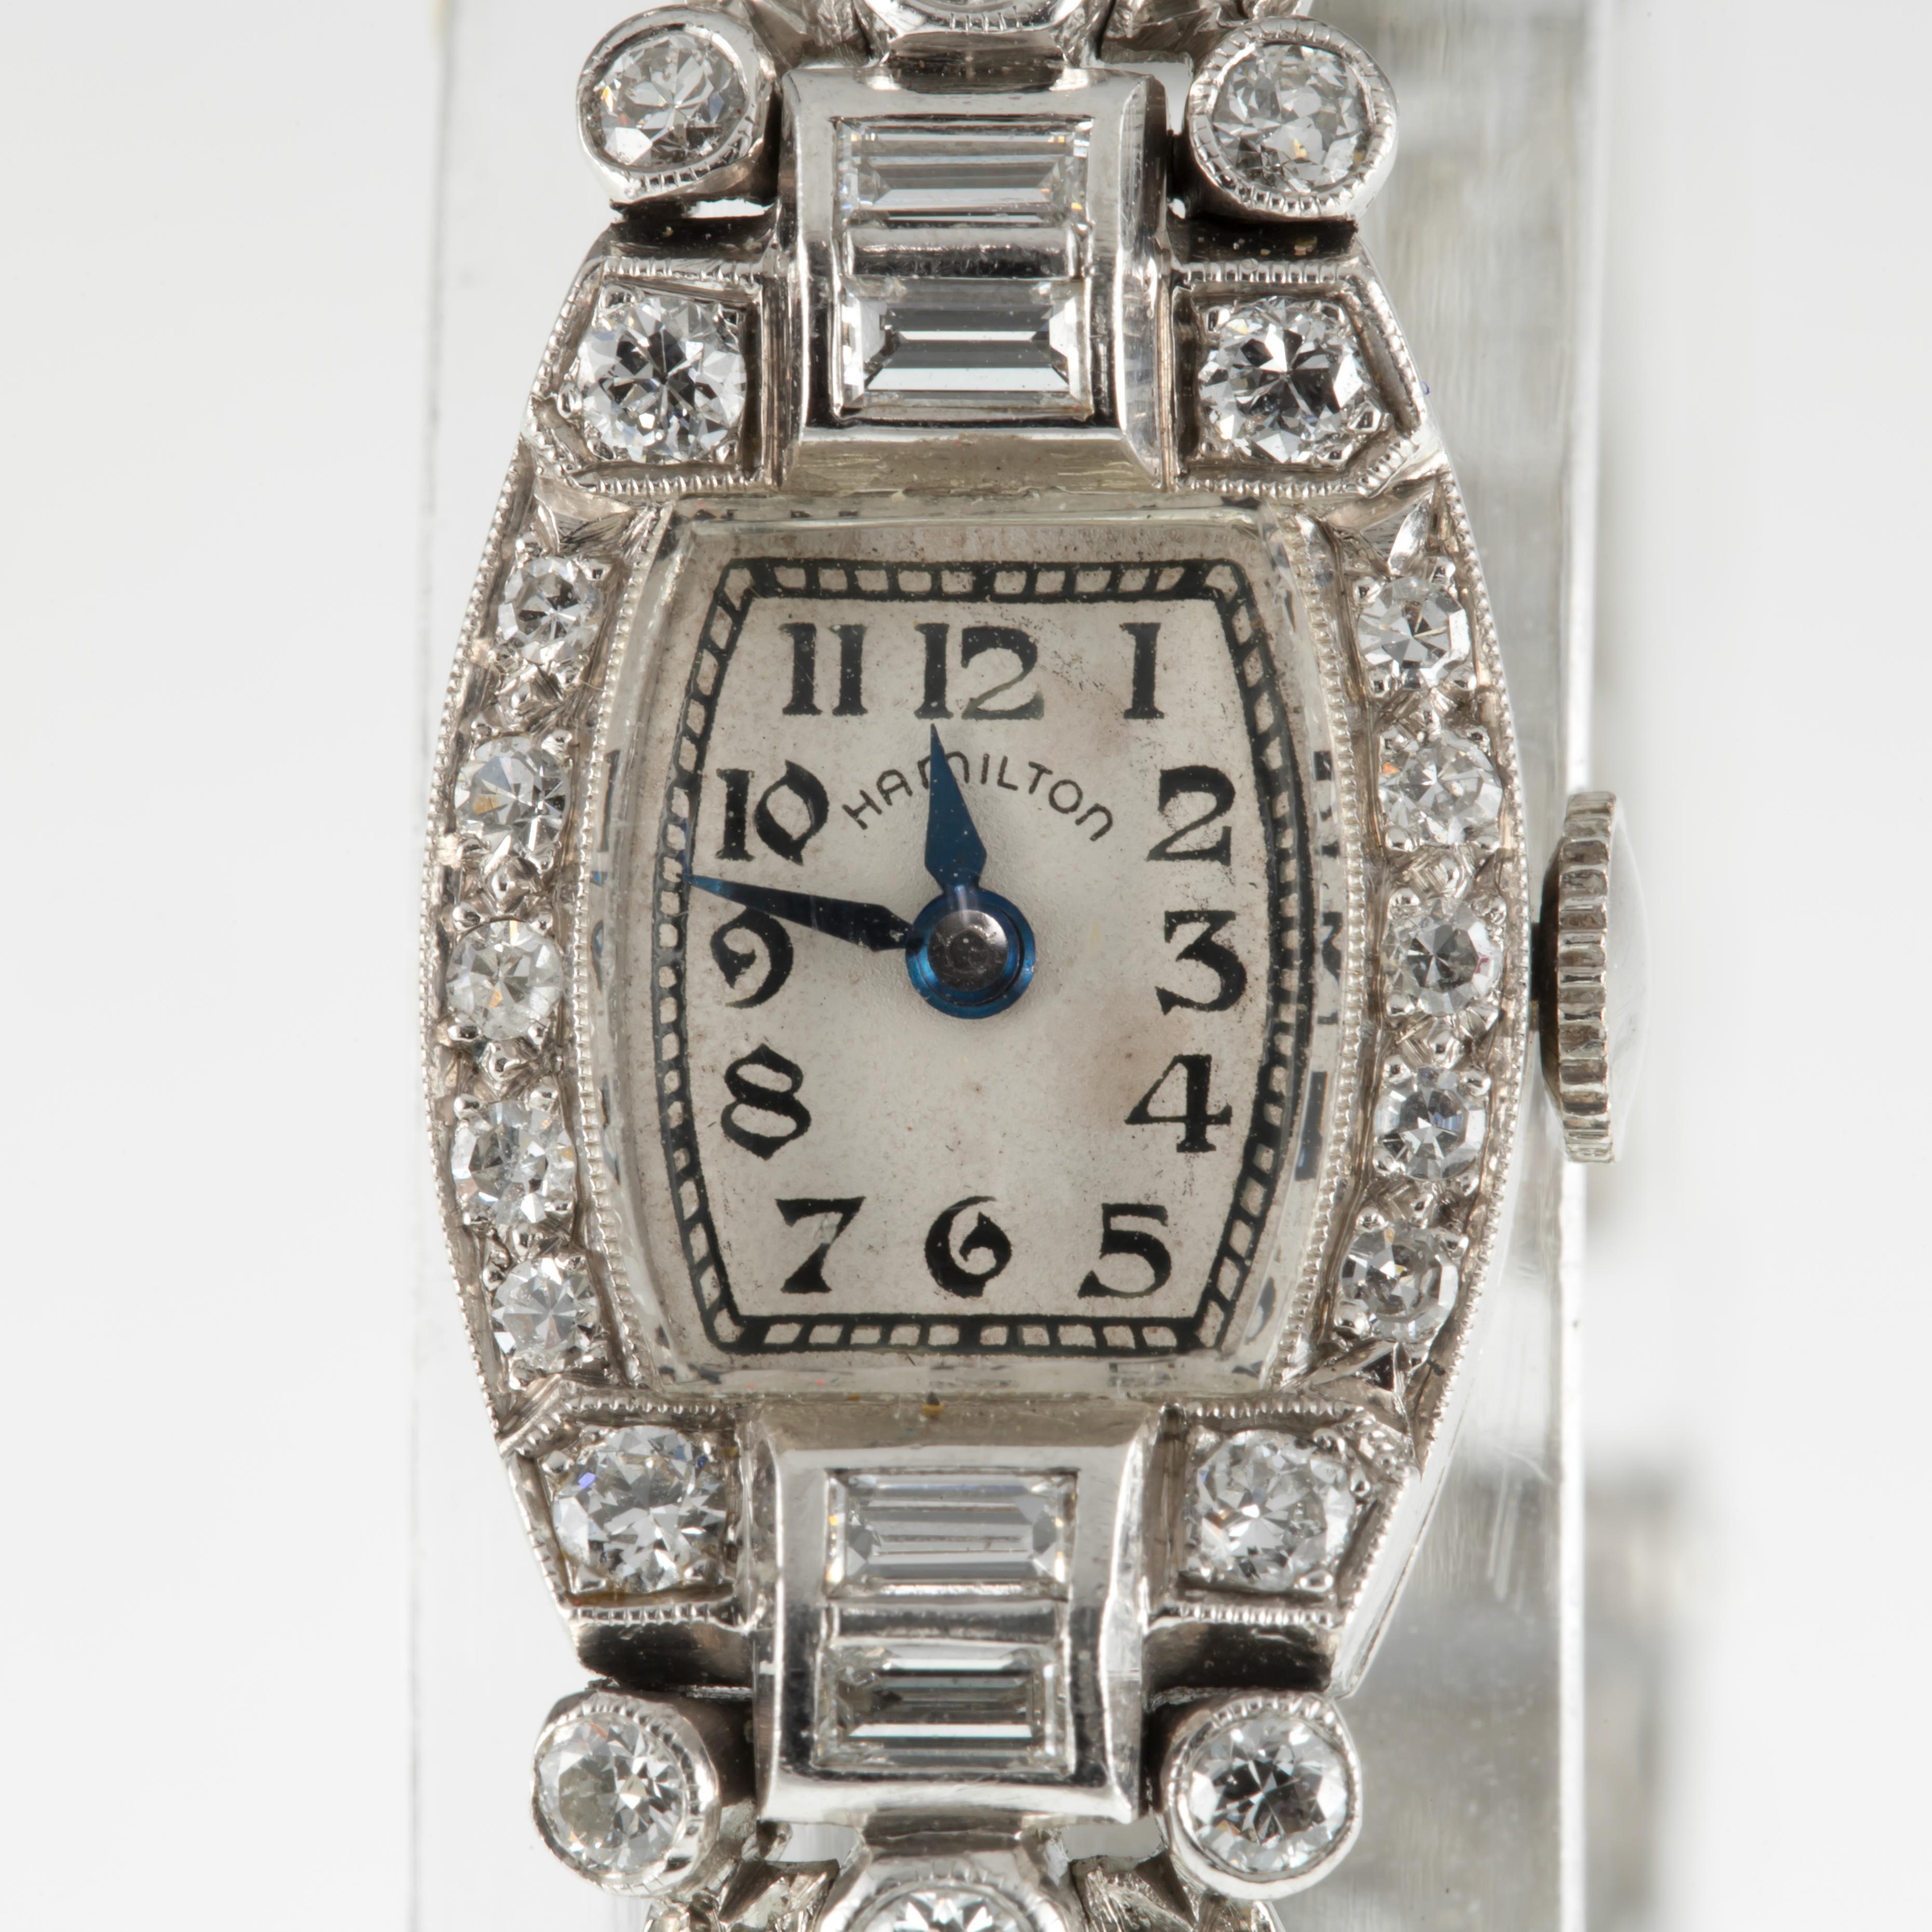 Hamilton Ladies Platinum Diamond Dress Watch Delicate Filigree Mov #911
Movement #911
Serial #T73771
Year of Manufacture: 1939
Platinum Tonneau Case w/ Diamond Accents
14 mm Wide (15 mm w/ Crown)
17 mm Long
Lug-to-Lug Length = 28 mm
Lug-to-Lug Width